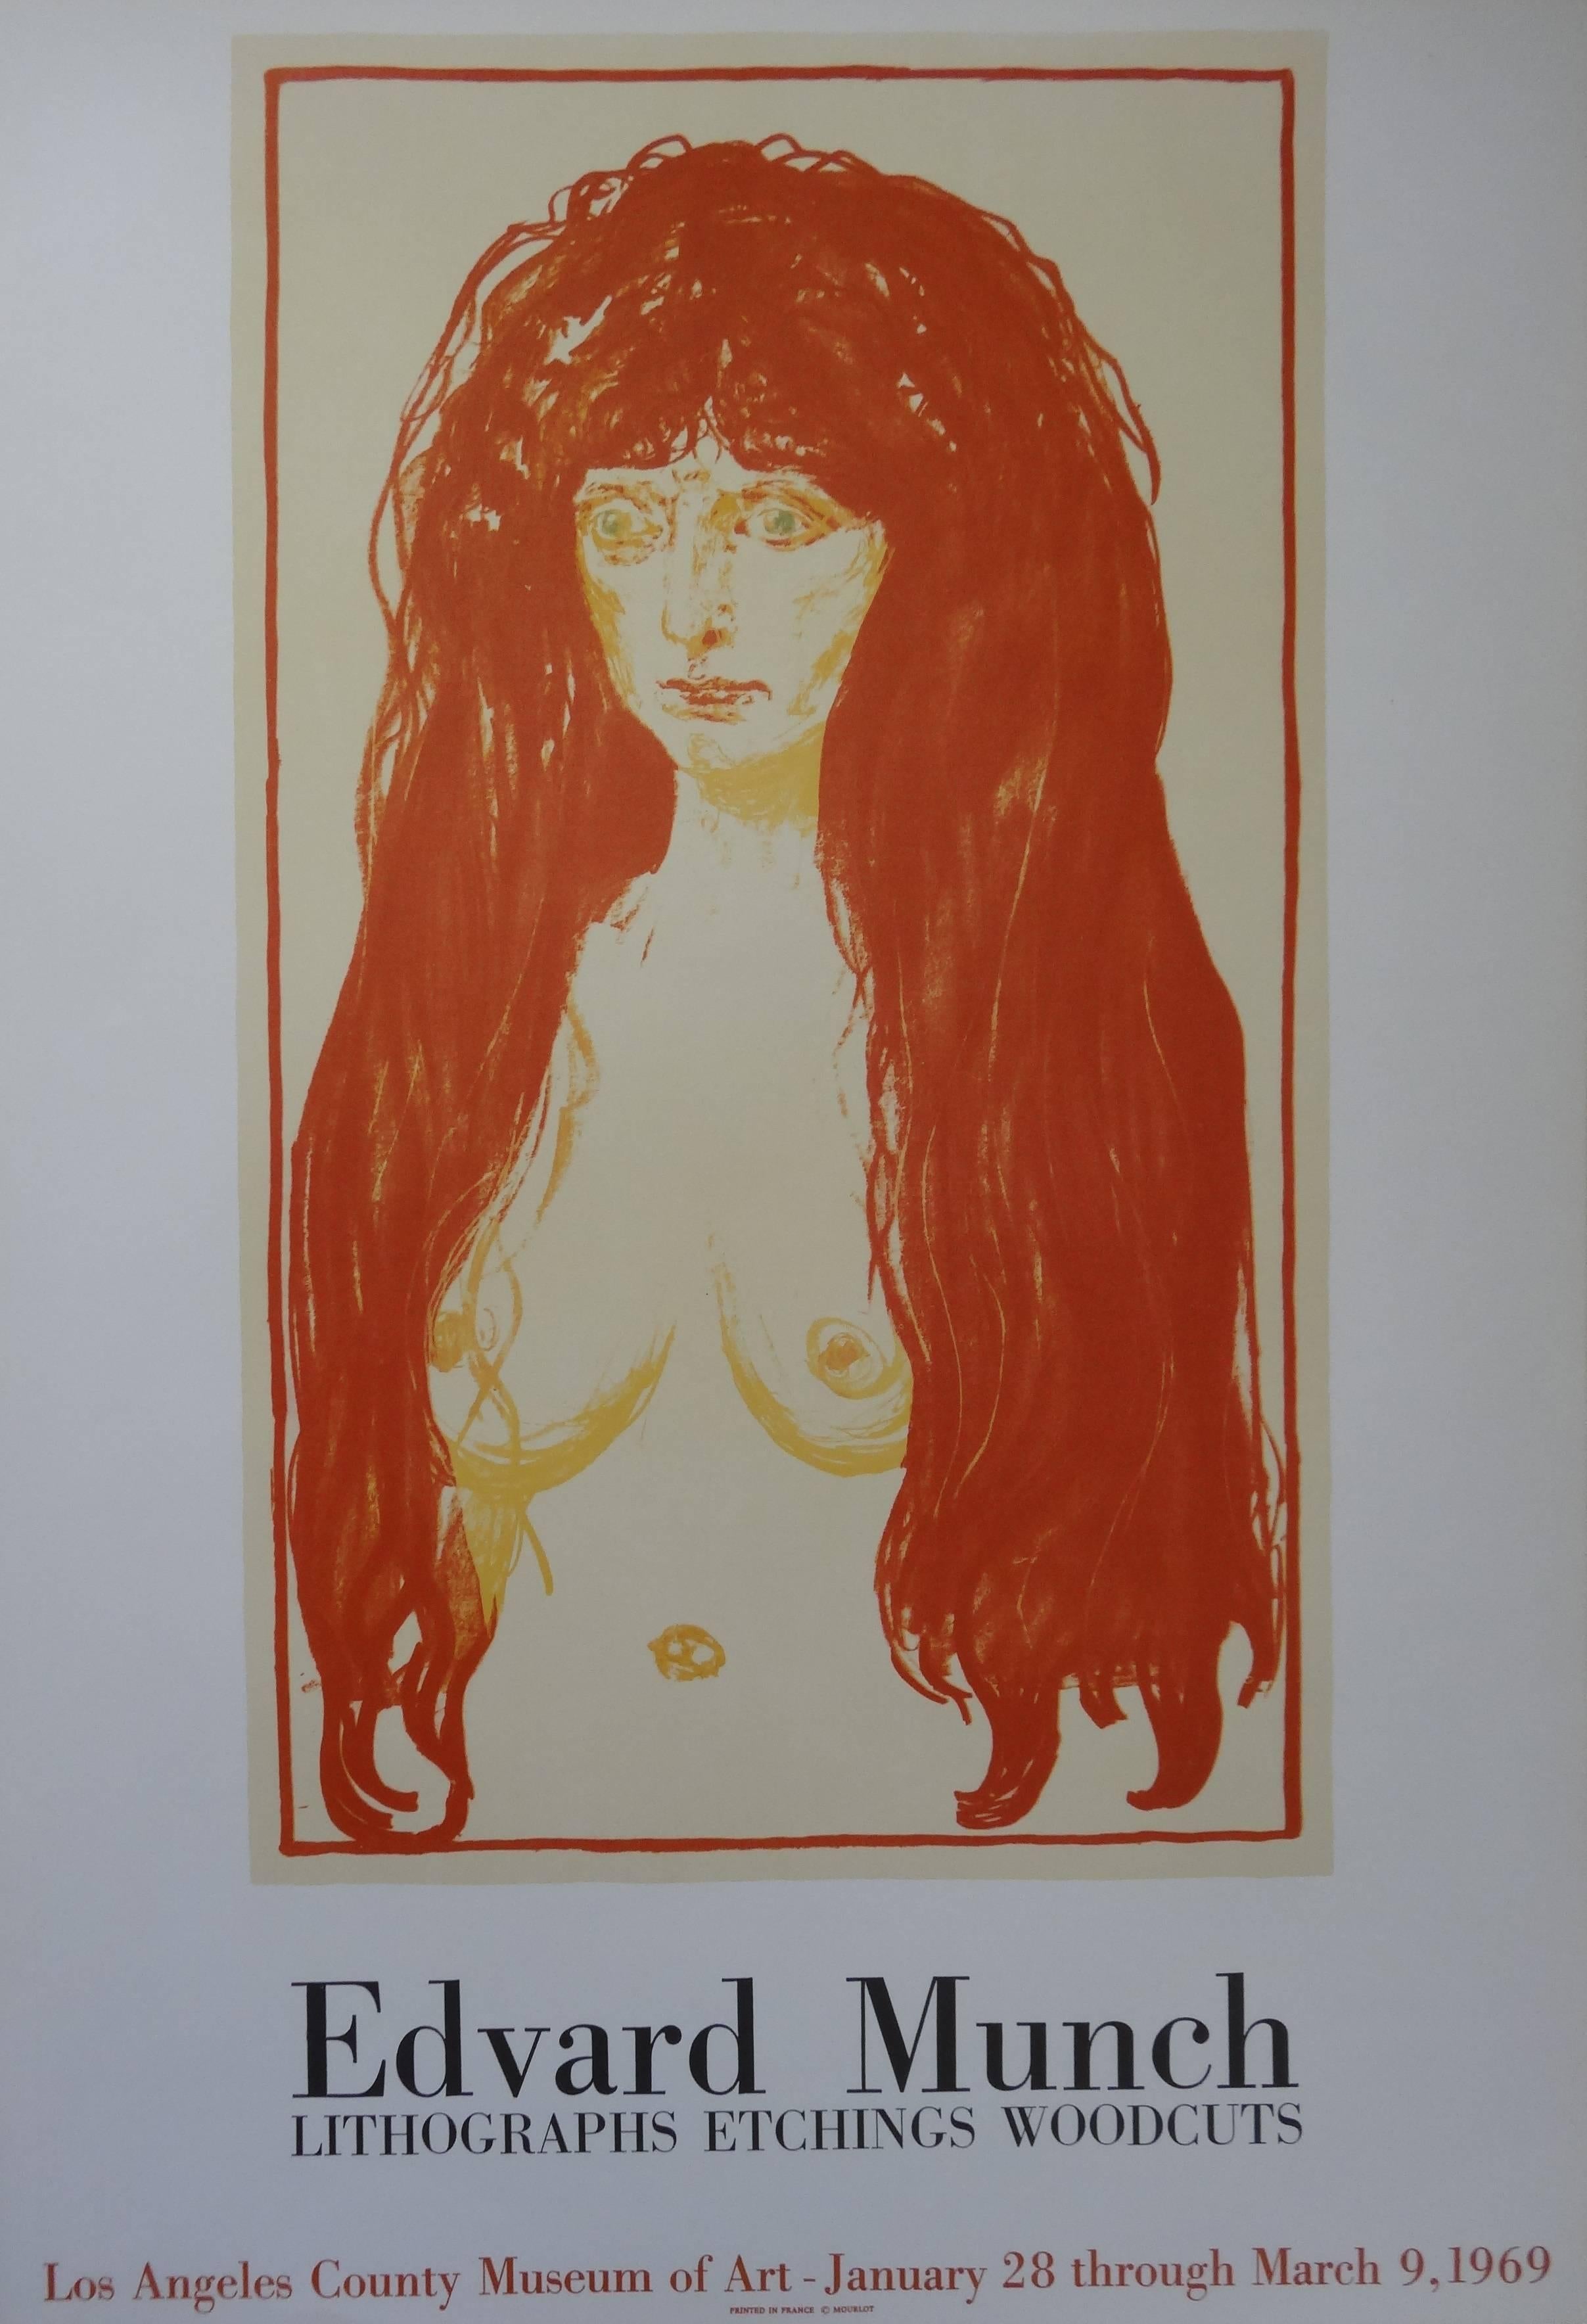 Edvard Munch Portrait Print - Redhead Woman - Exhibition Poster - Los Angeles County Museum (MOURLOT)